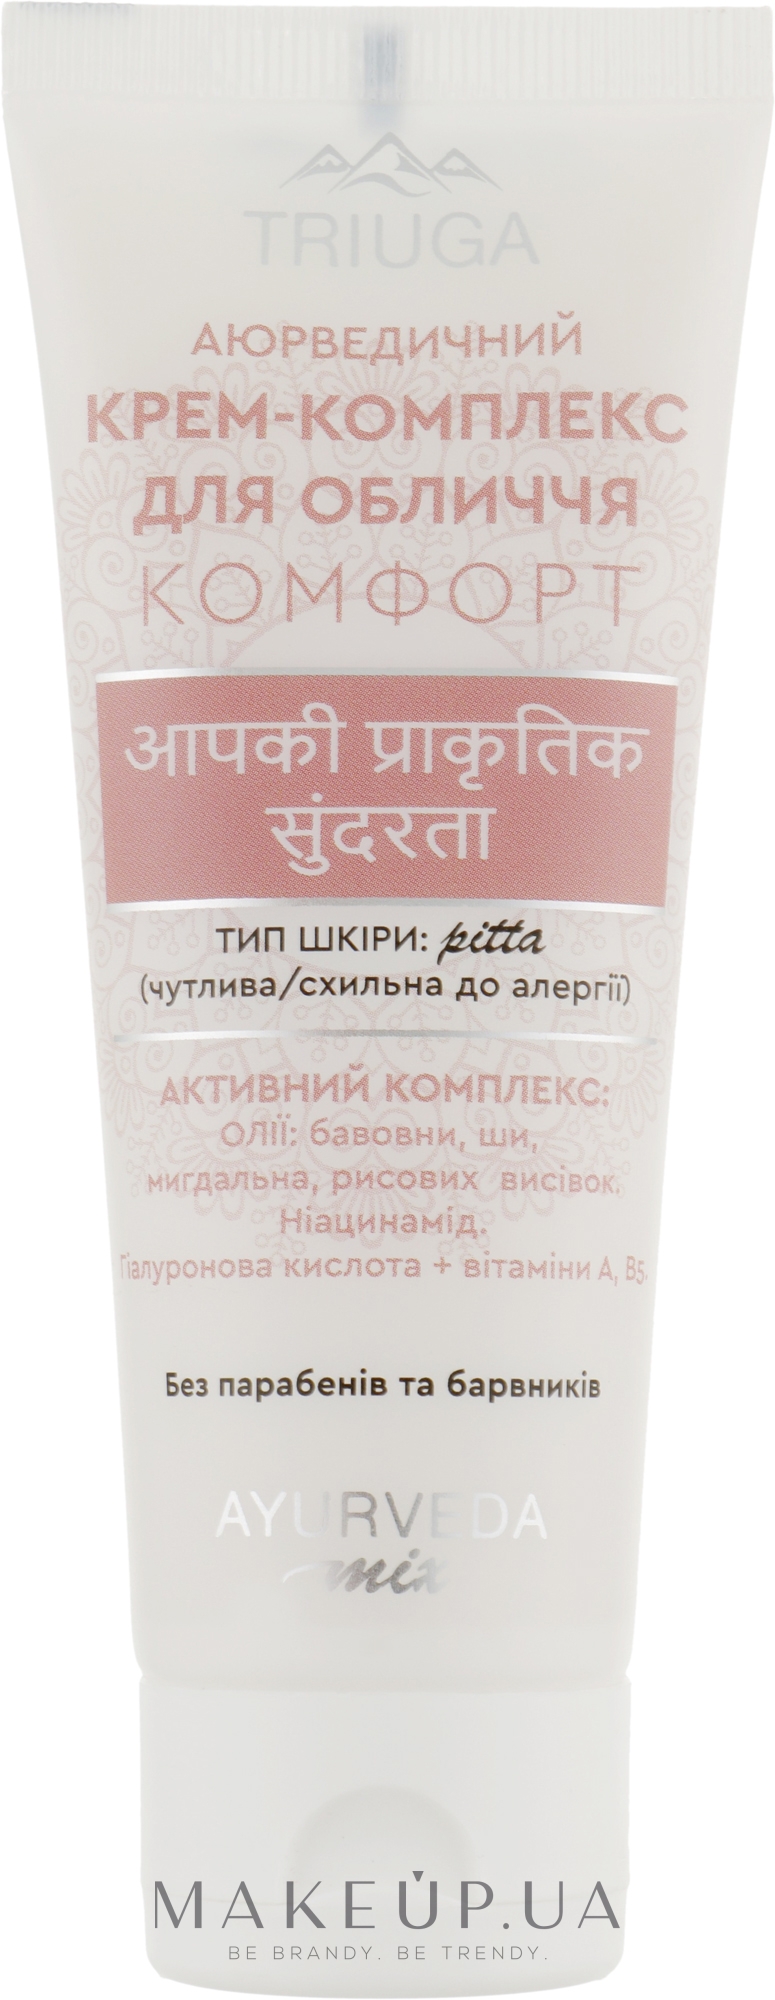 Крем-комплекс для обличчя "Комфорт" для чутливої шкіри обличчя - Triuga Ayurveda Cream — фото 75ml